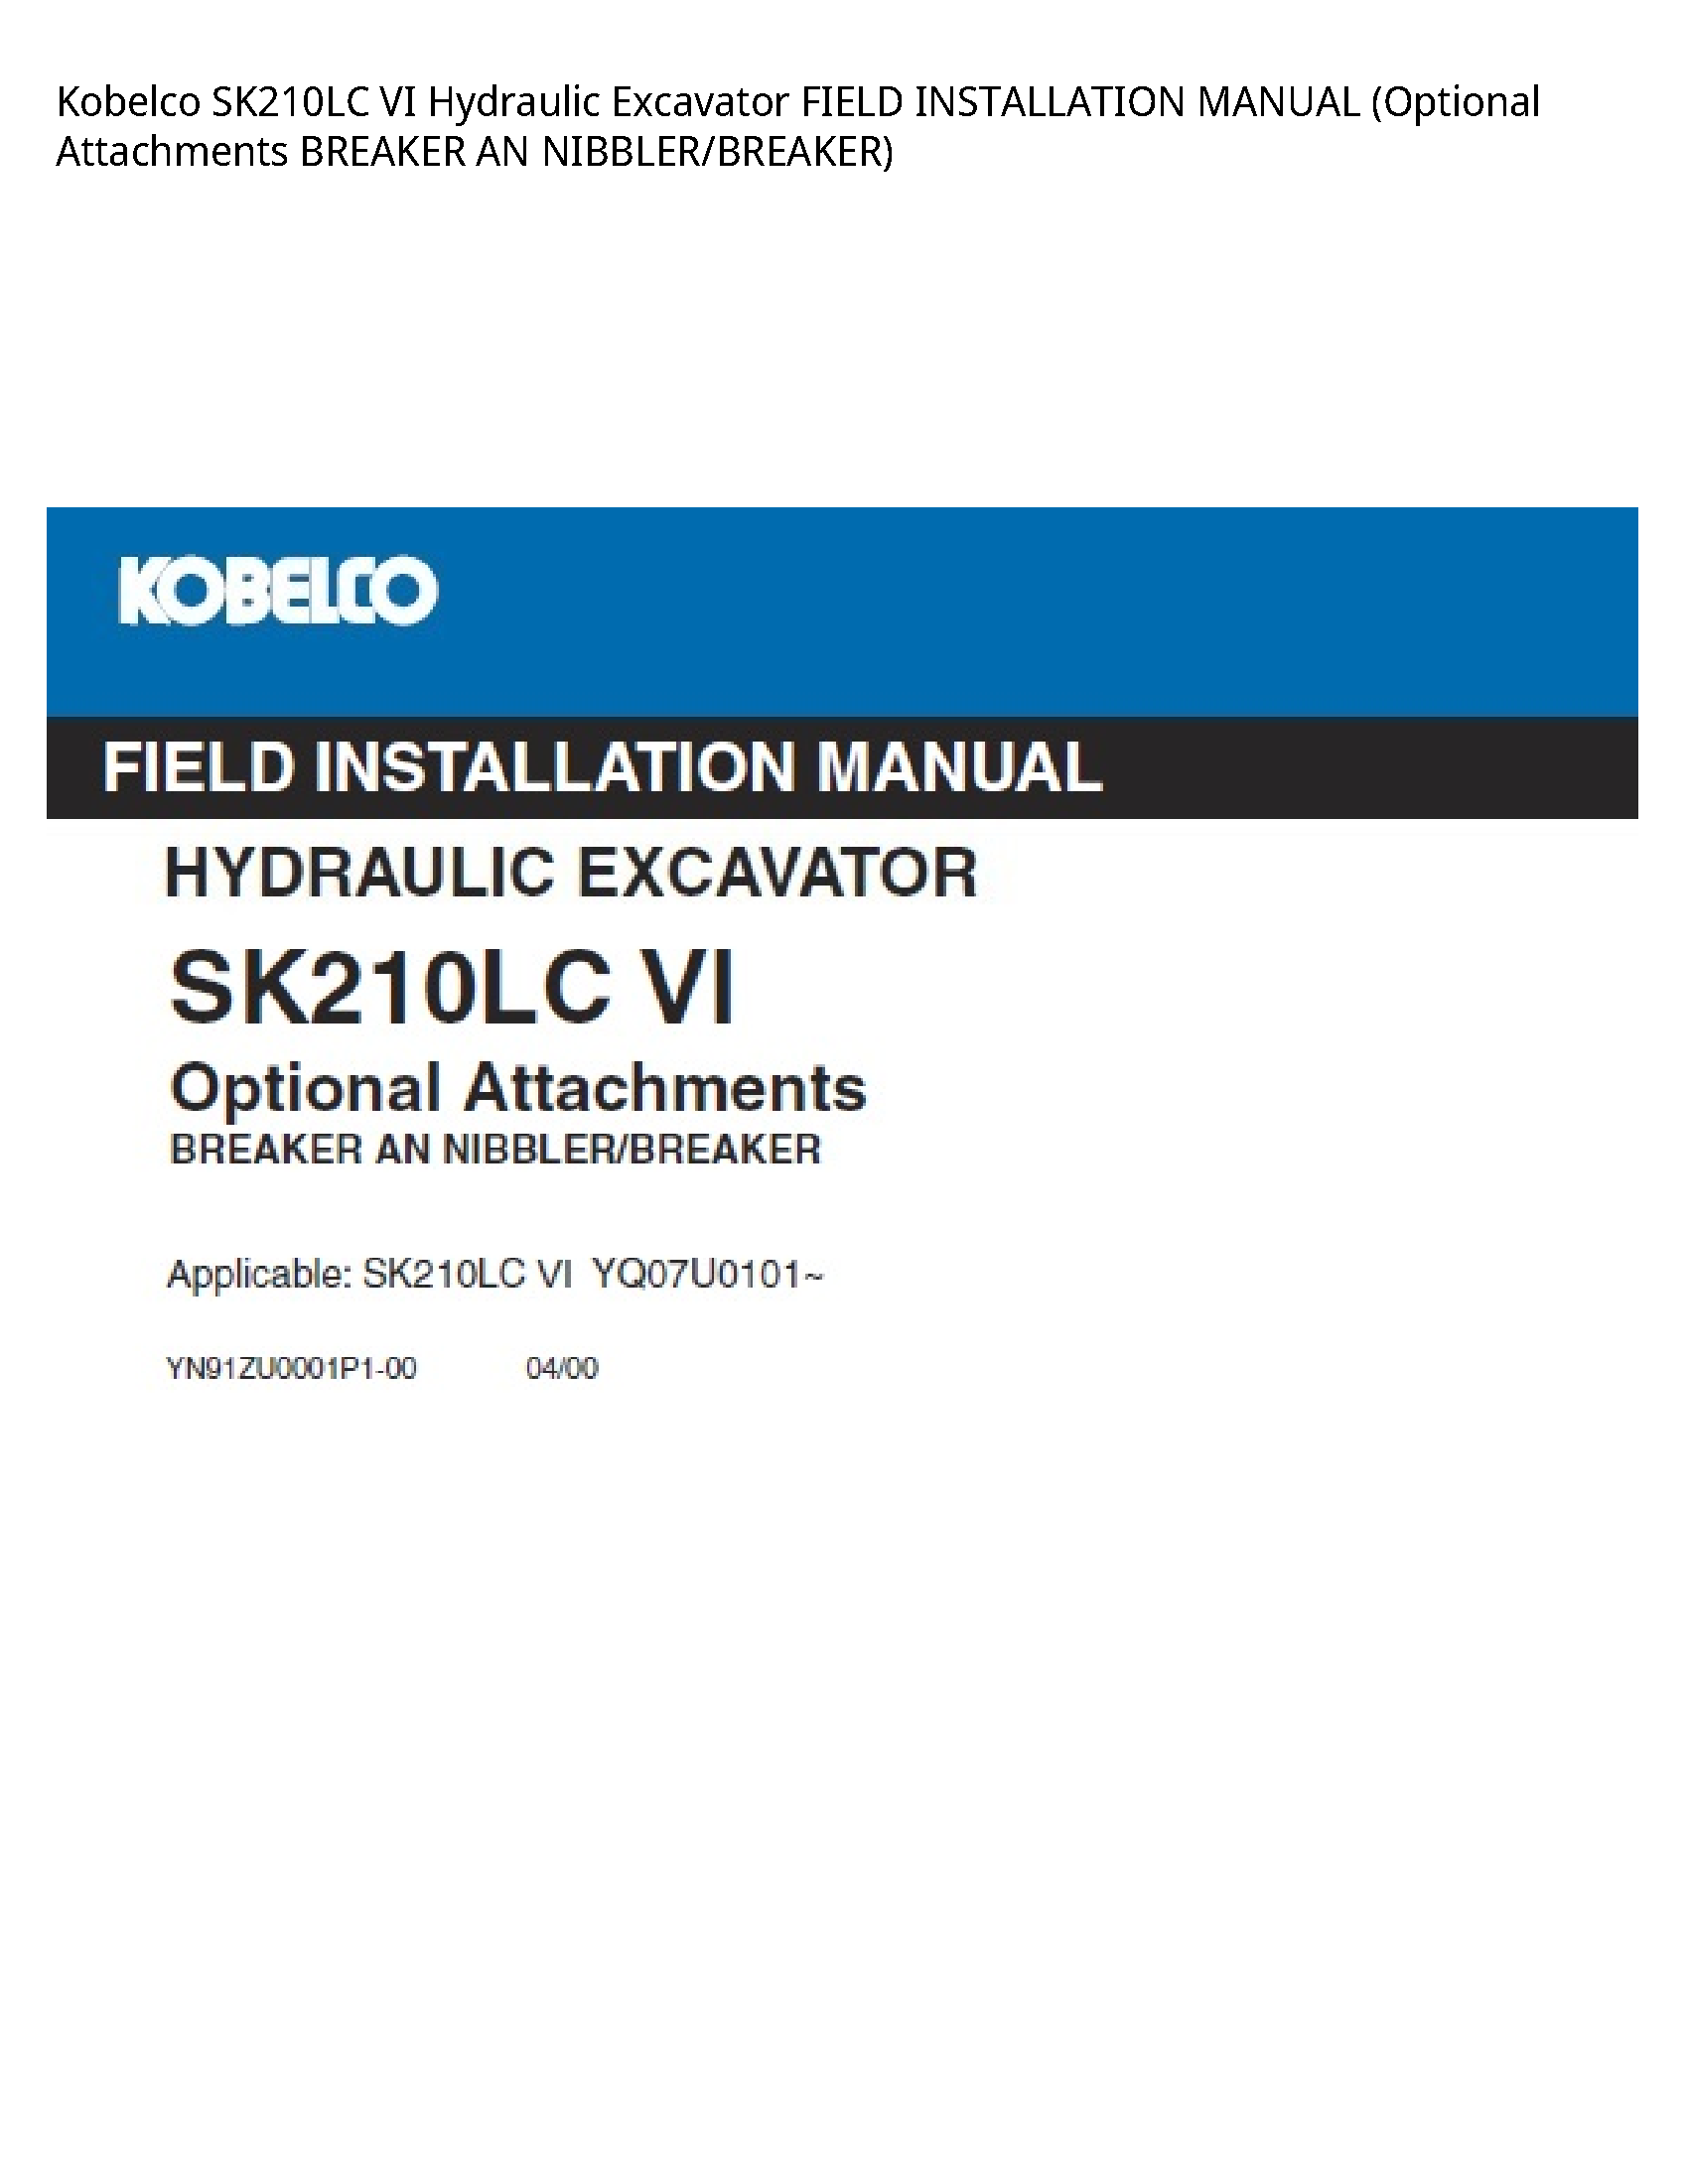 Kobelco SK210LC VI Hydraulic Excavator FIELD INSTALLATION (Optional Attachments BREAKER AN NIBBLER/BREAKER) manual